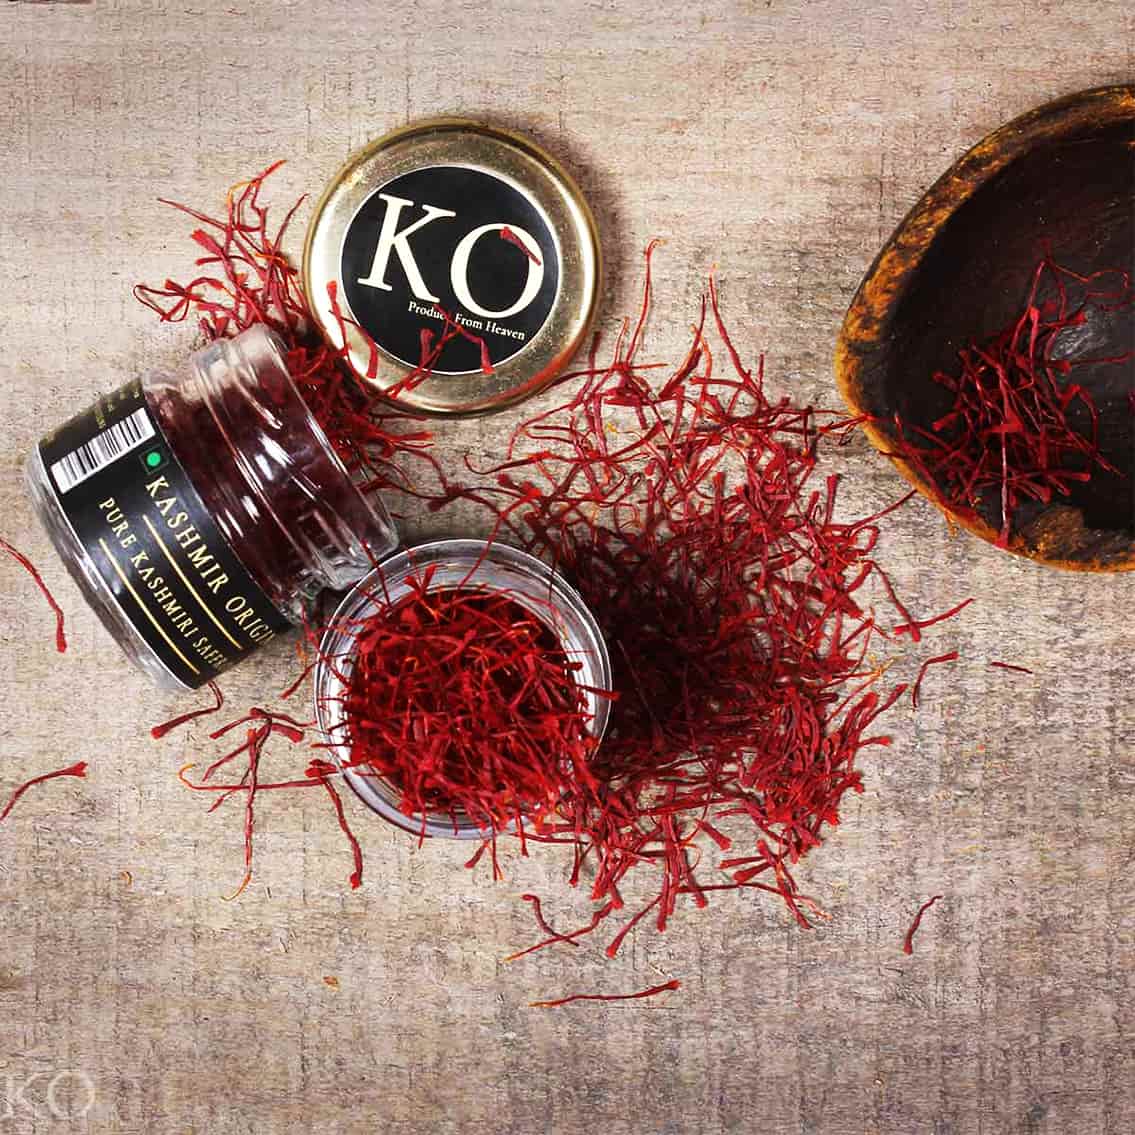 KO Pure and Best Quality Organic Saffron (3 gms)